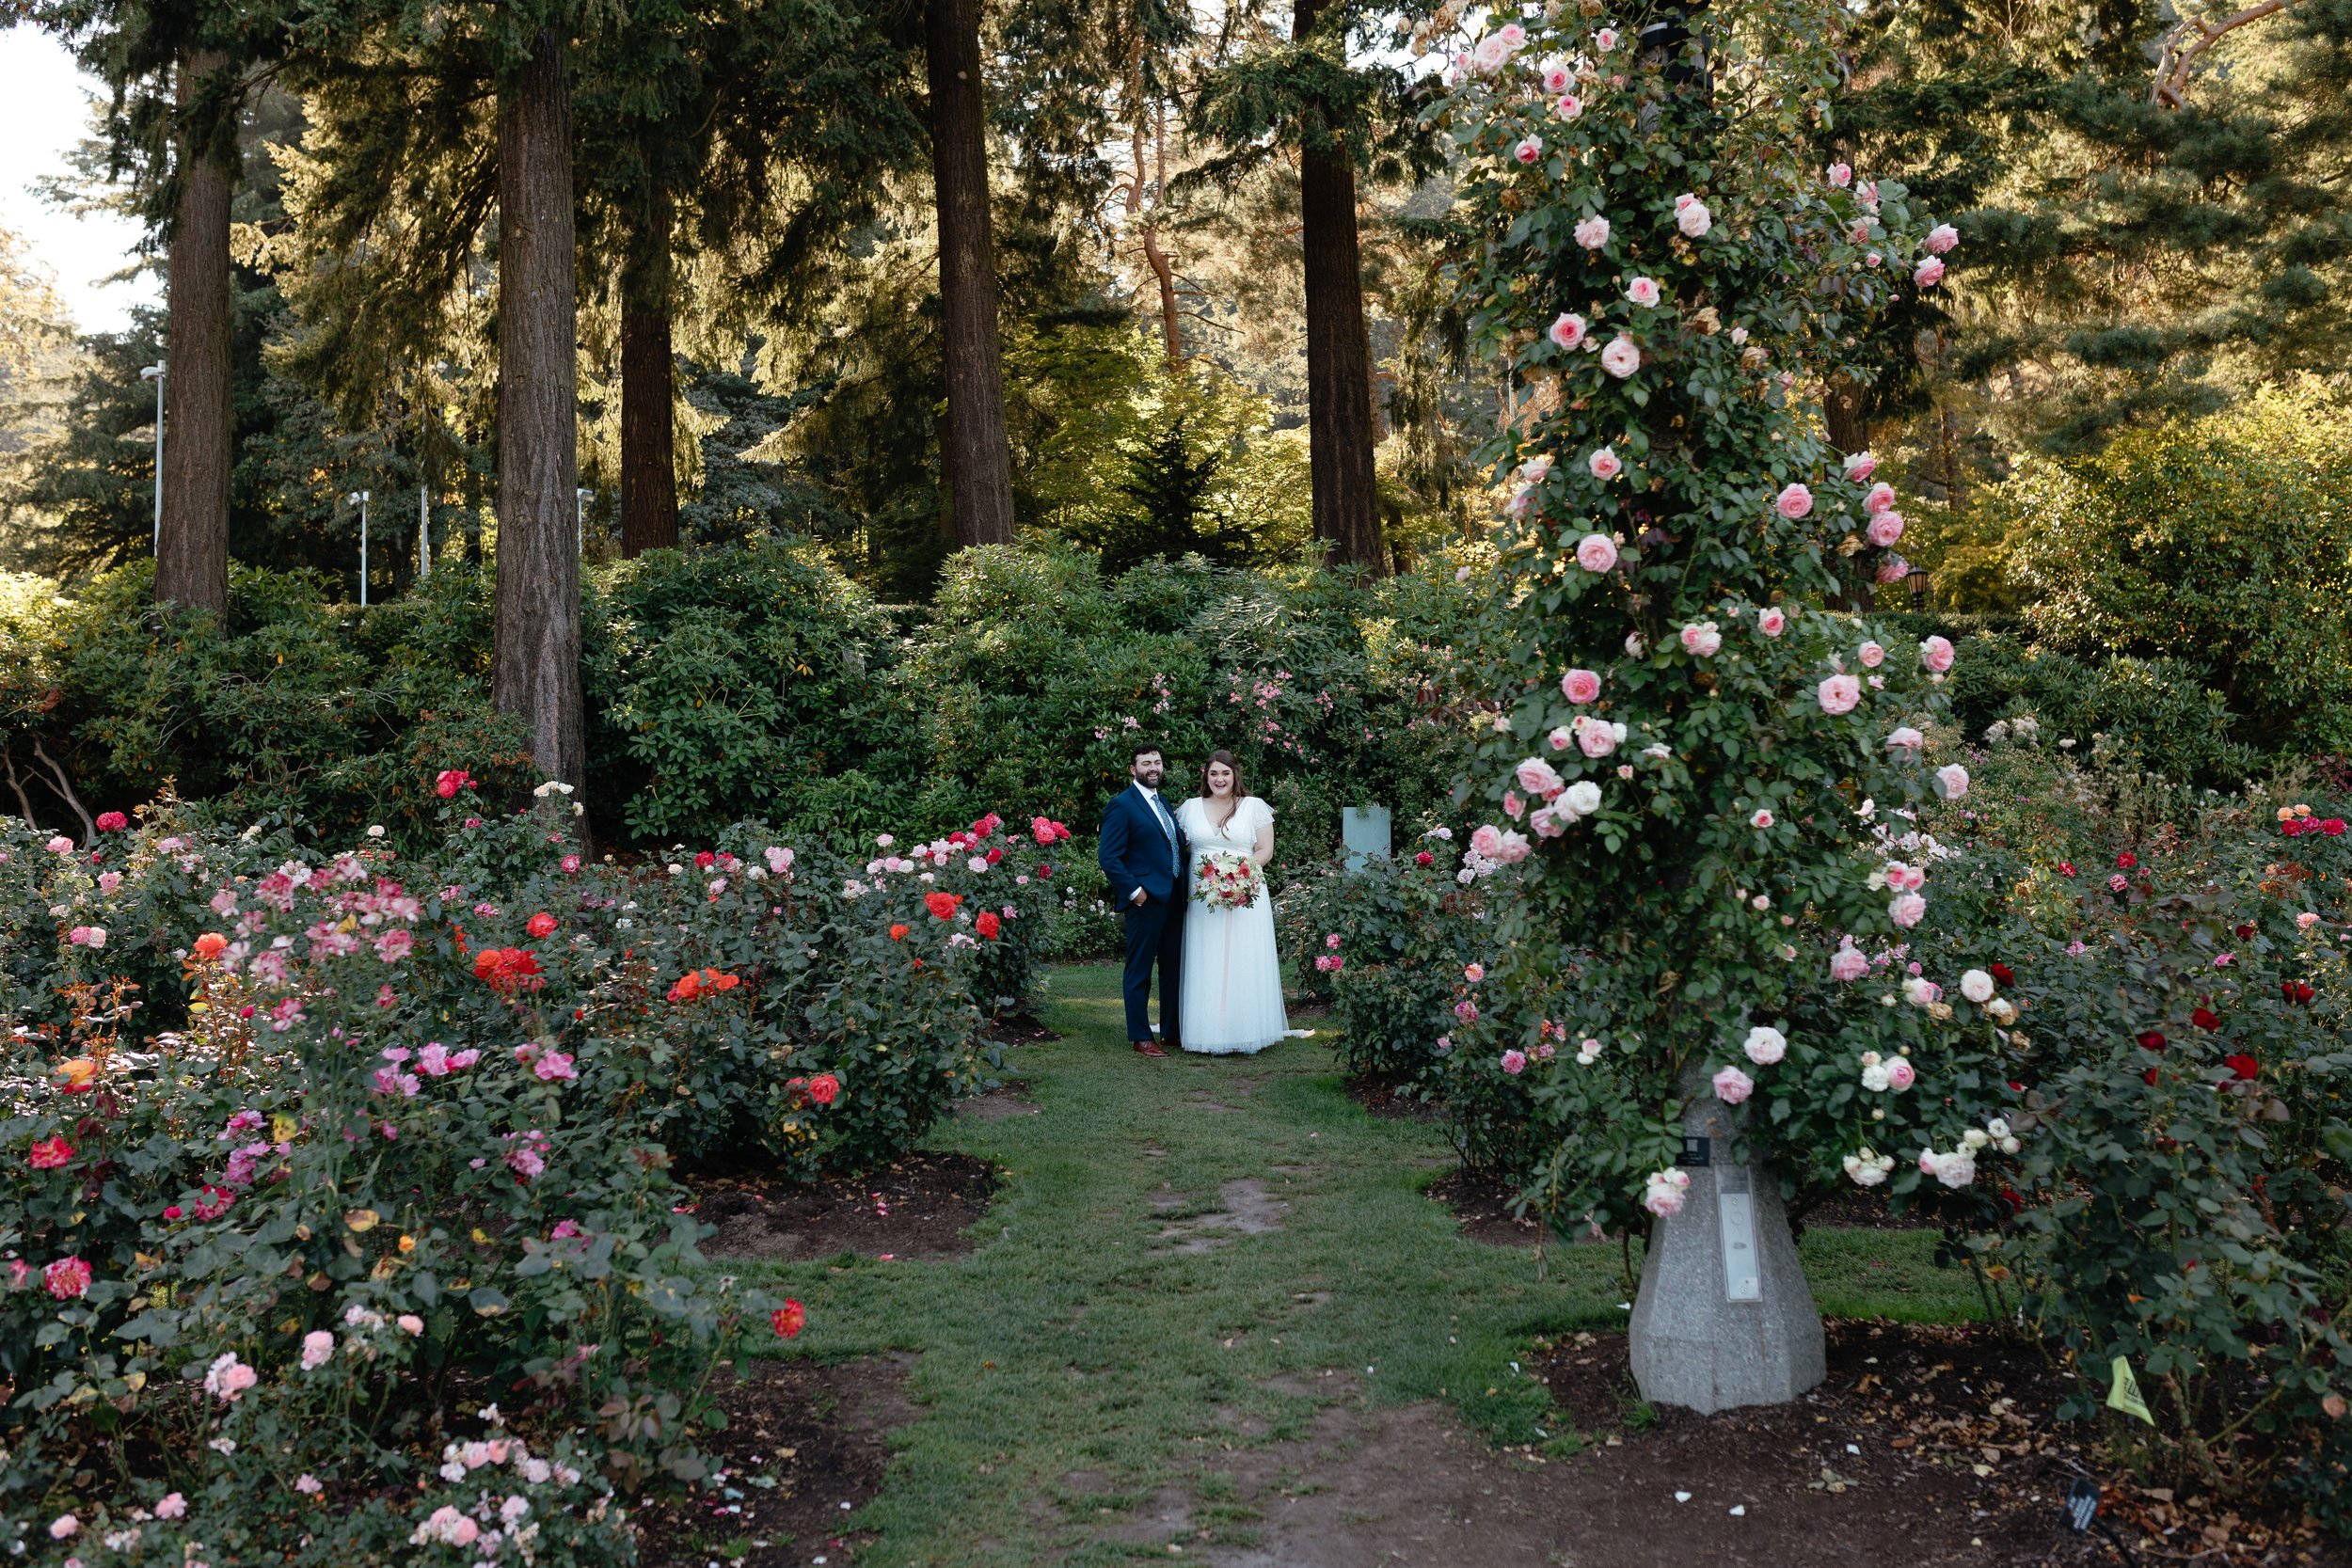  bride in white dress holding pink bouquet, groom in navy blue suit, holding hands, kissing, Oregon elopement, portland international rose garden 